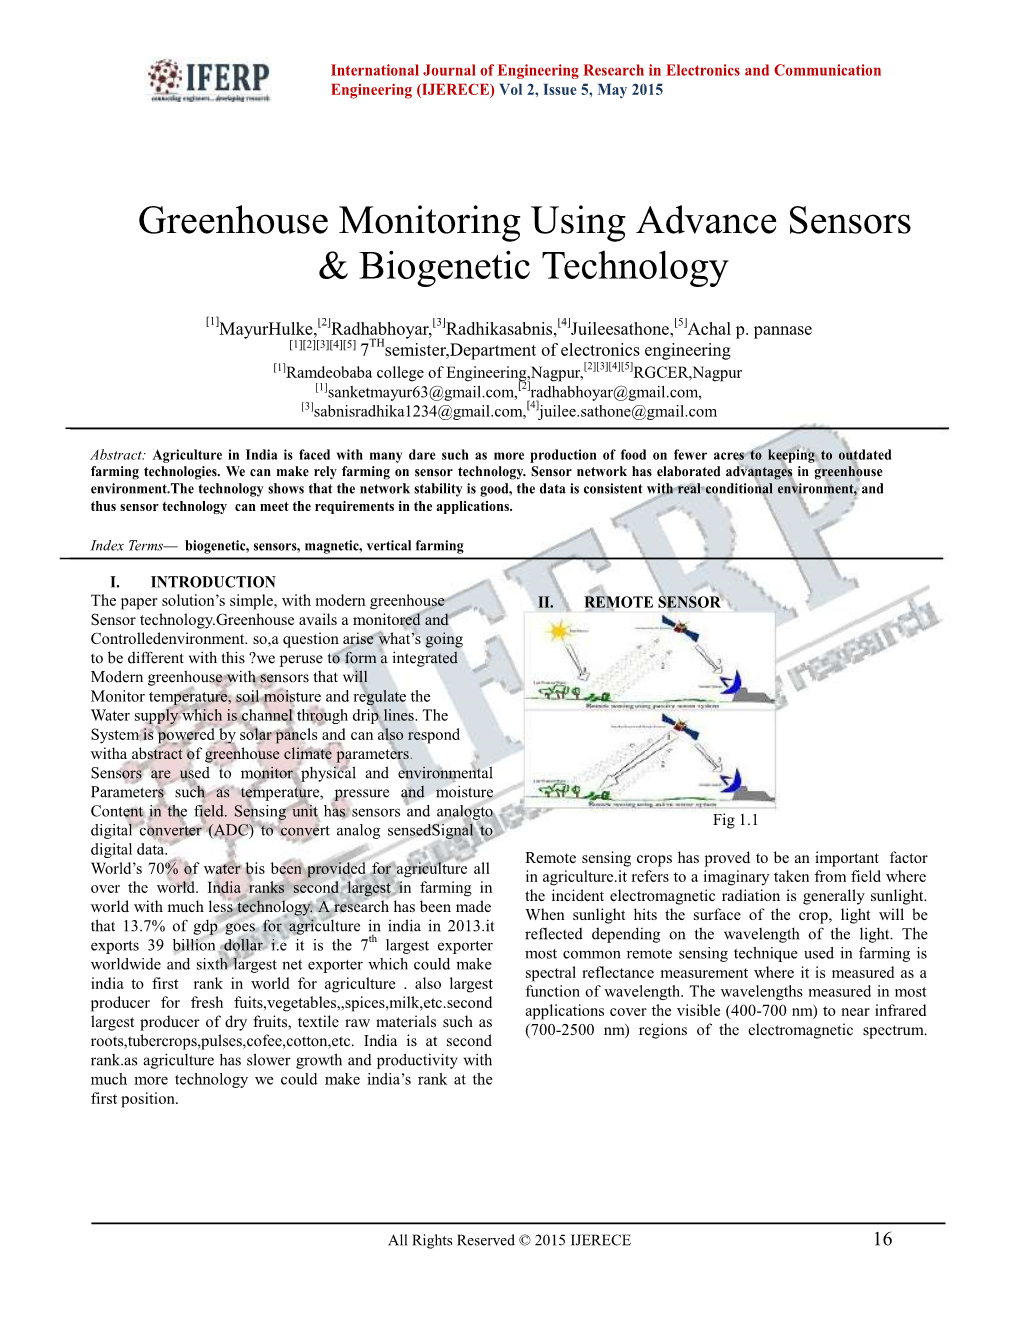 Greenhouse Monitoring Using Advance Sensors & Biogenetic Technology